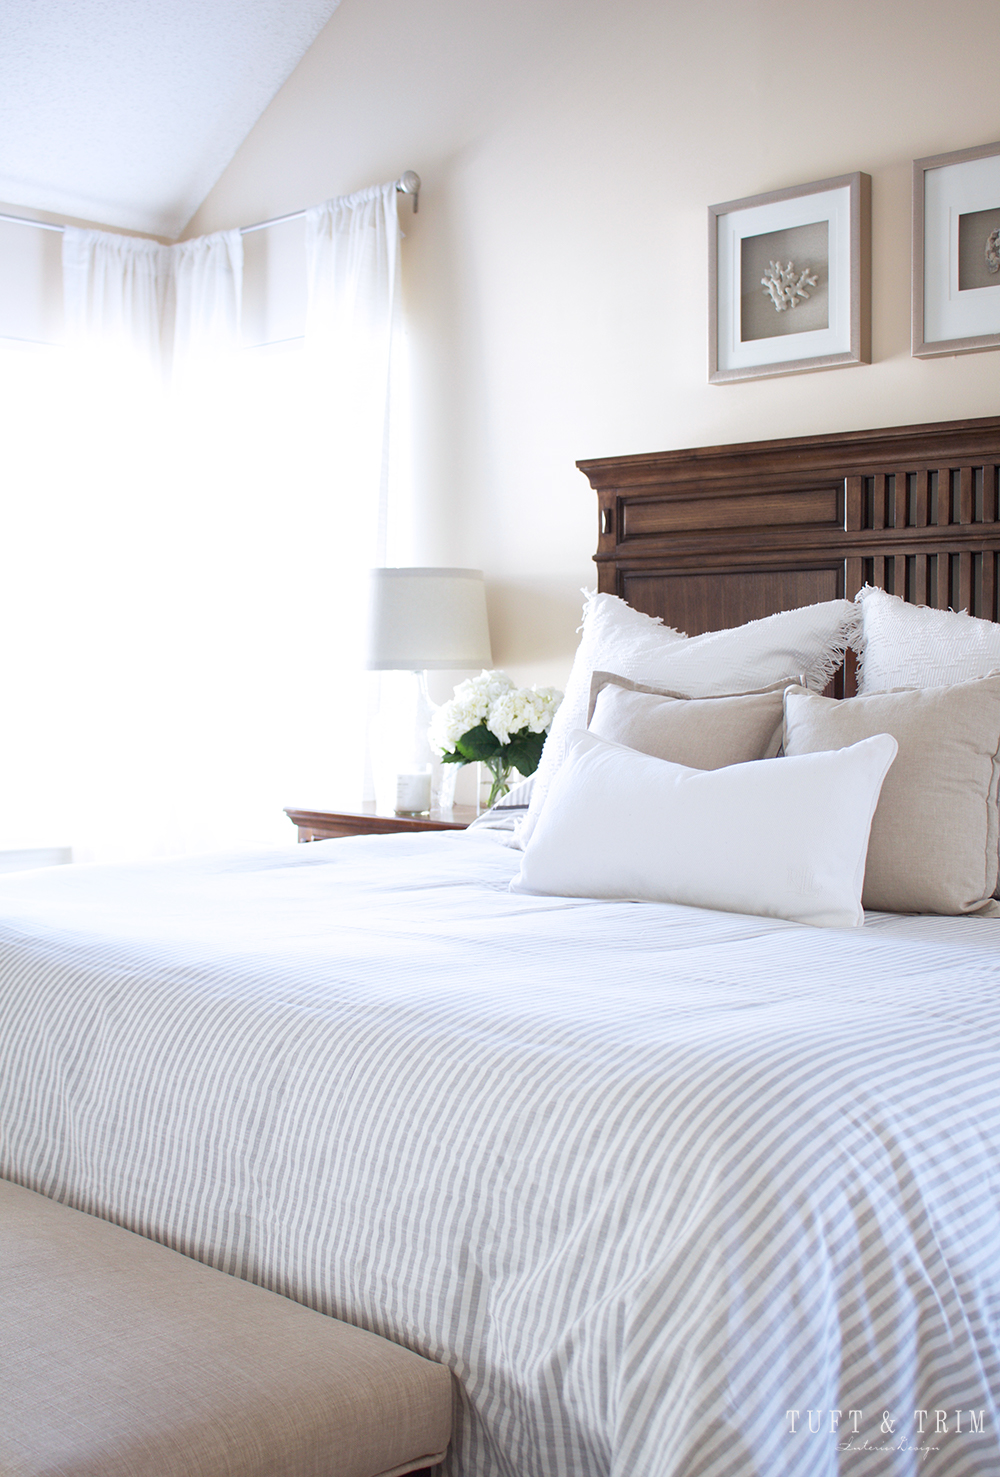 Rooms We Love Tour: Coastal Bedroom Makeover by Tuft & Trim Interior Design